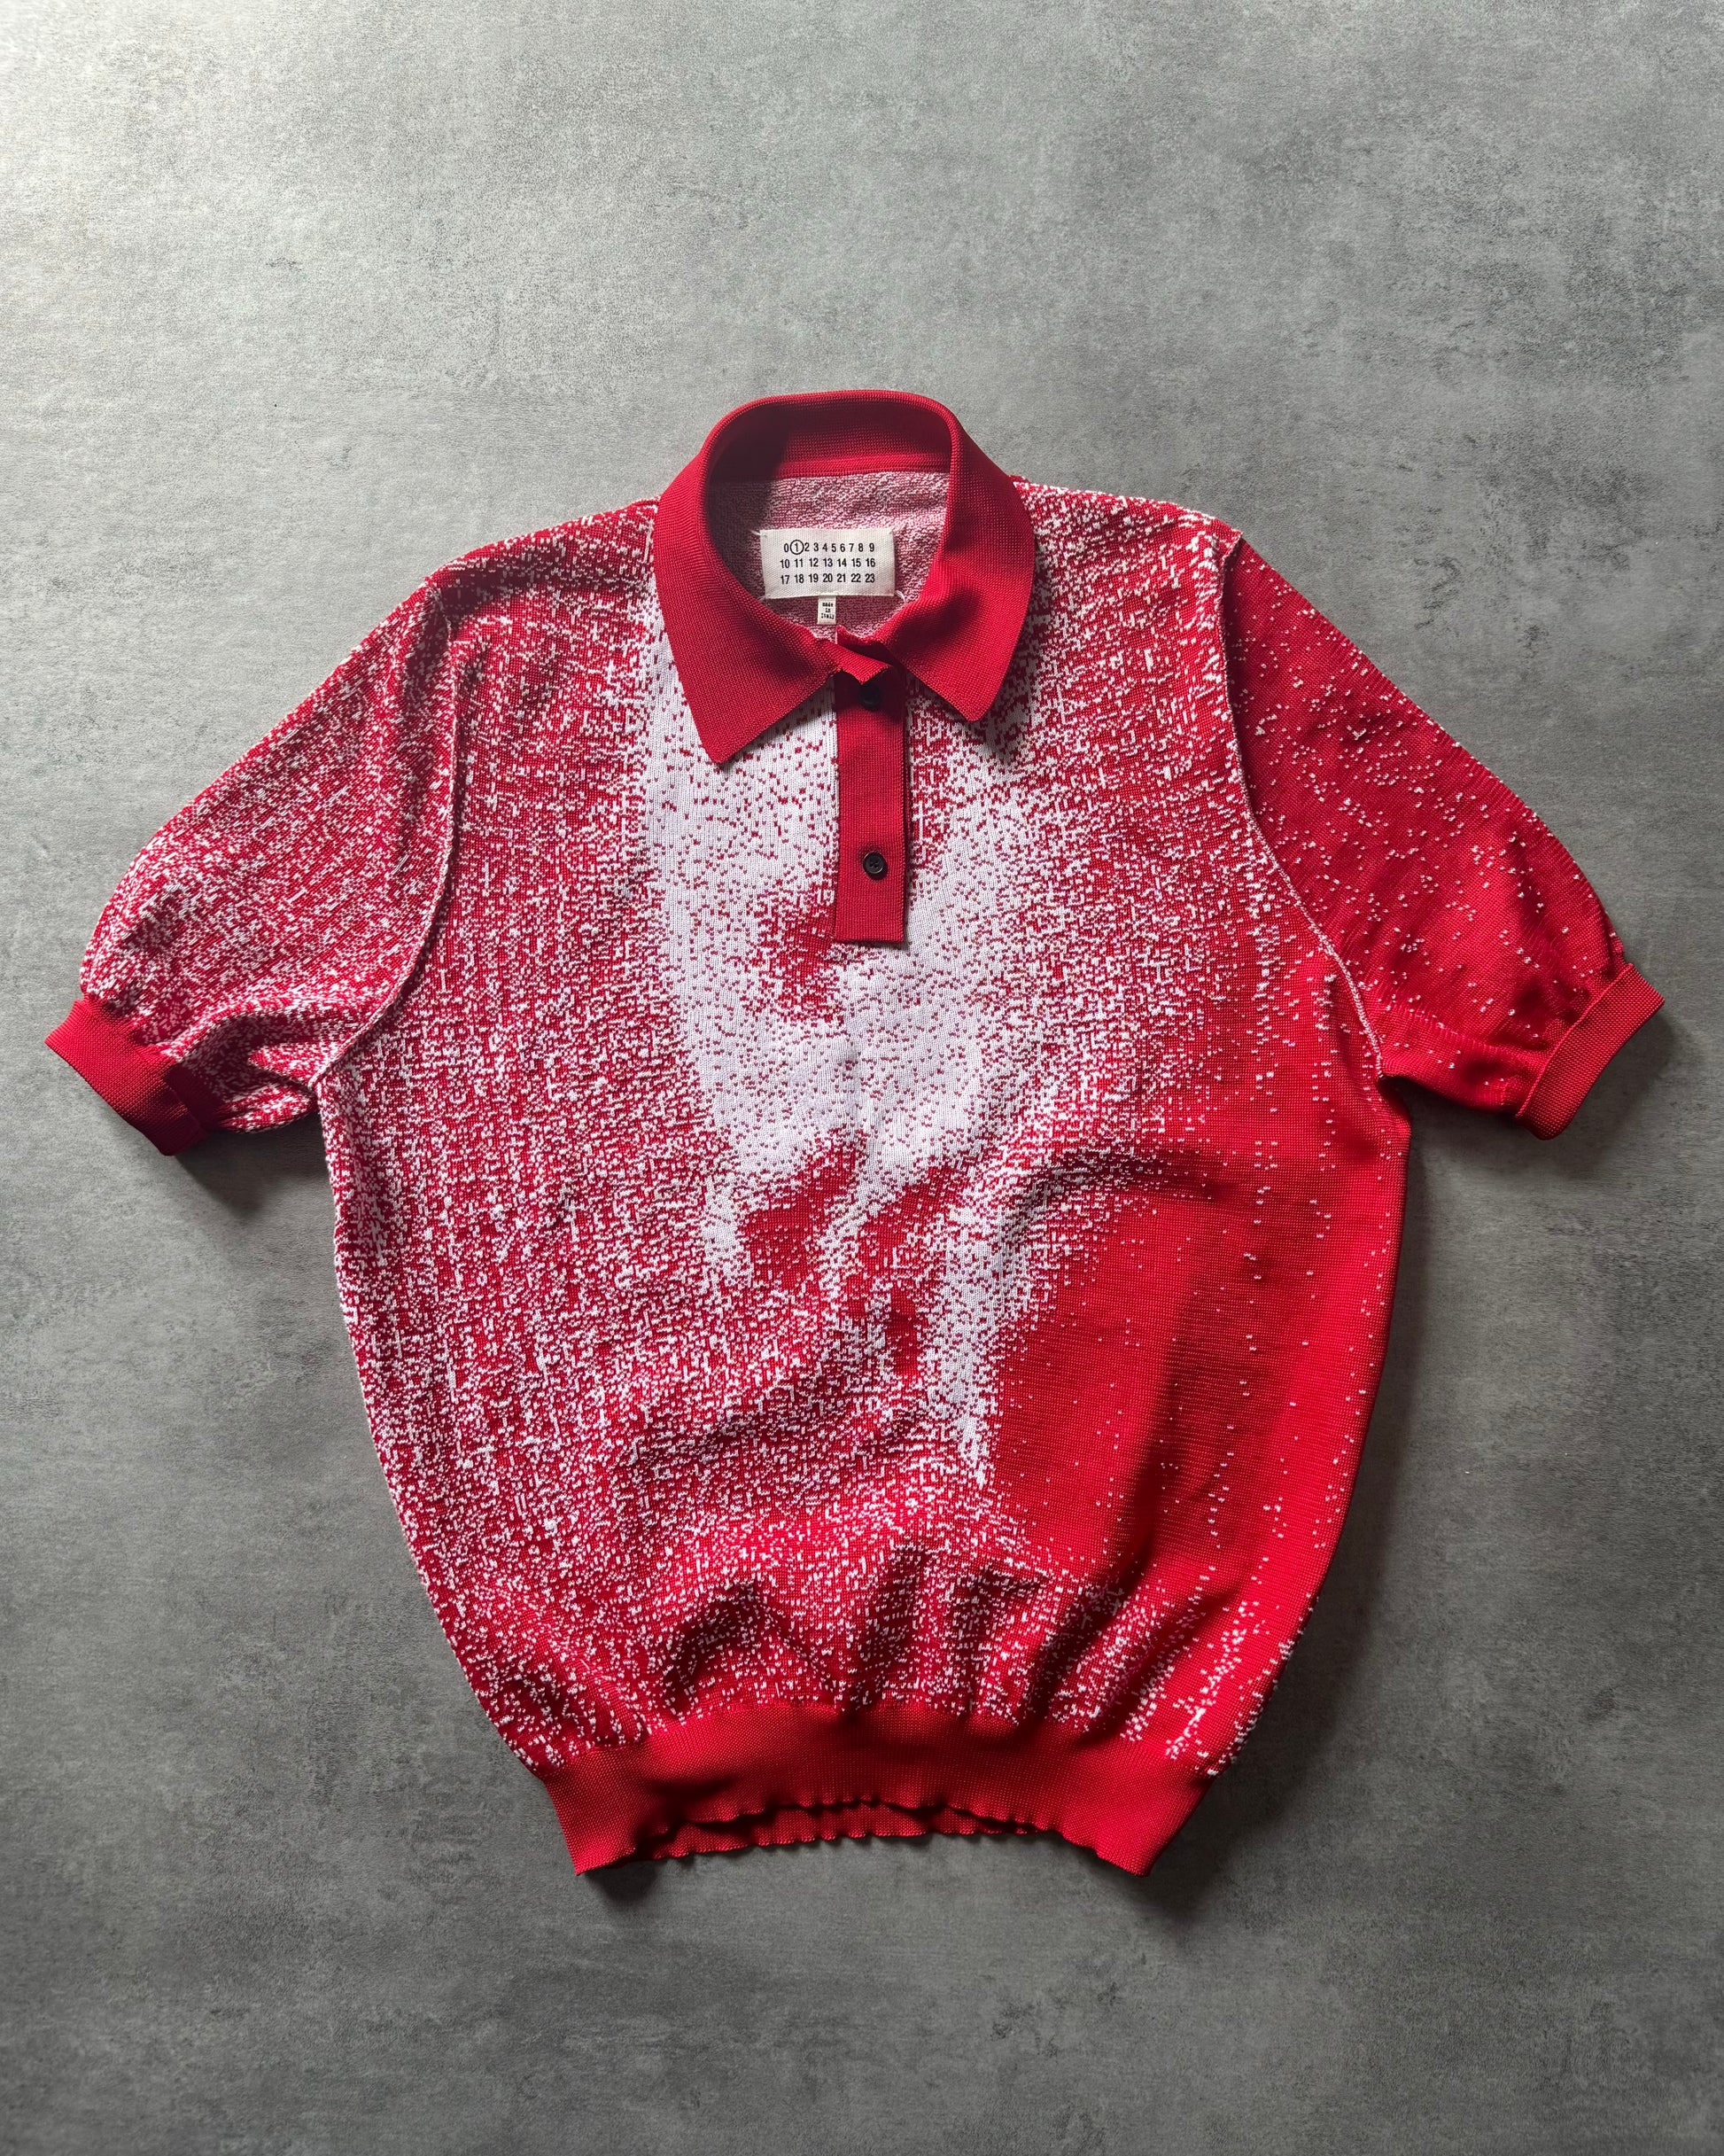 SS2017 Maison Margiela Pixelized Red Human Polo Shirt (S) - 1